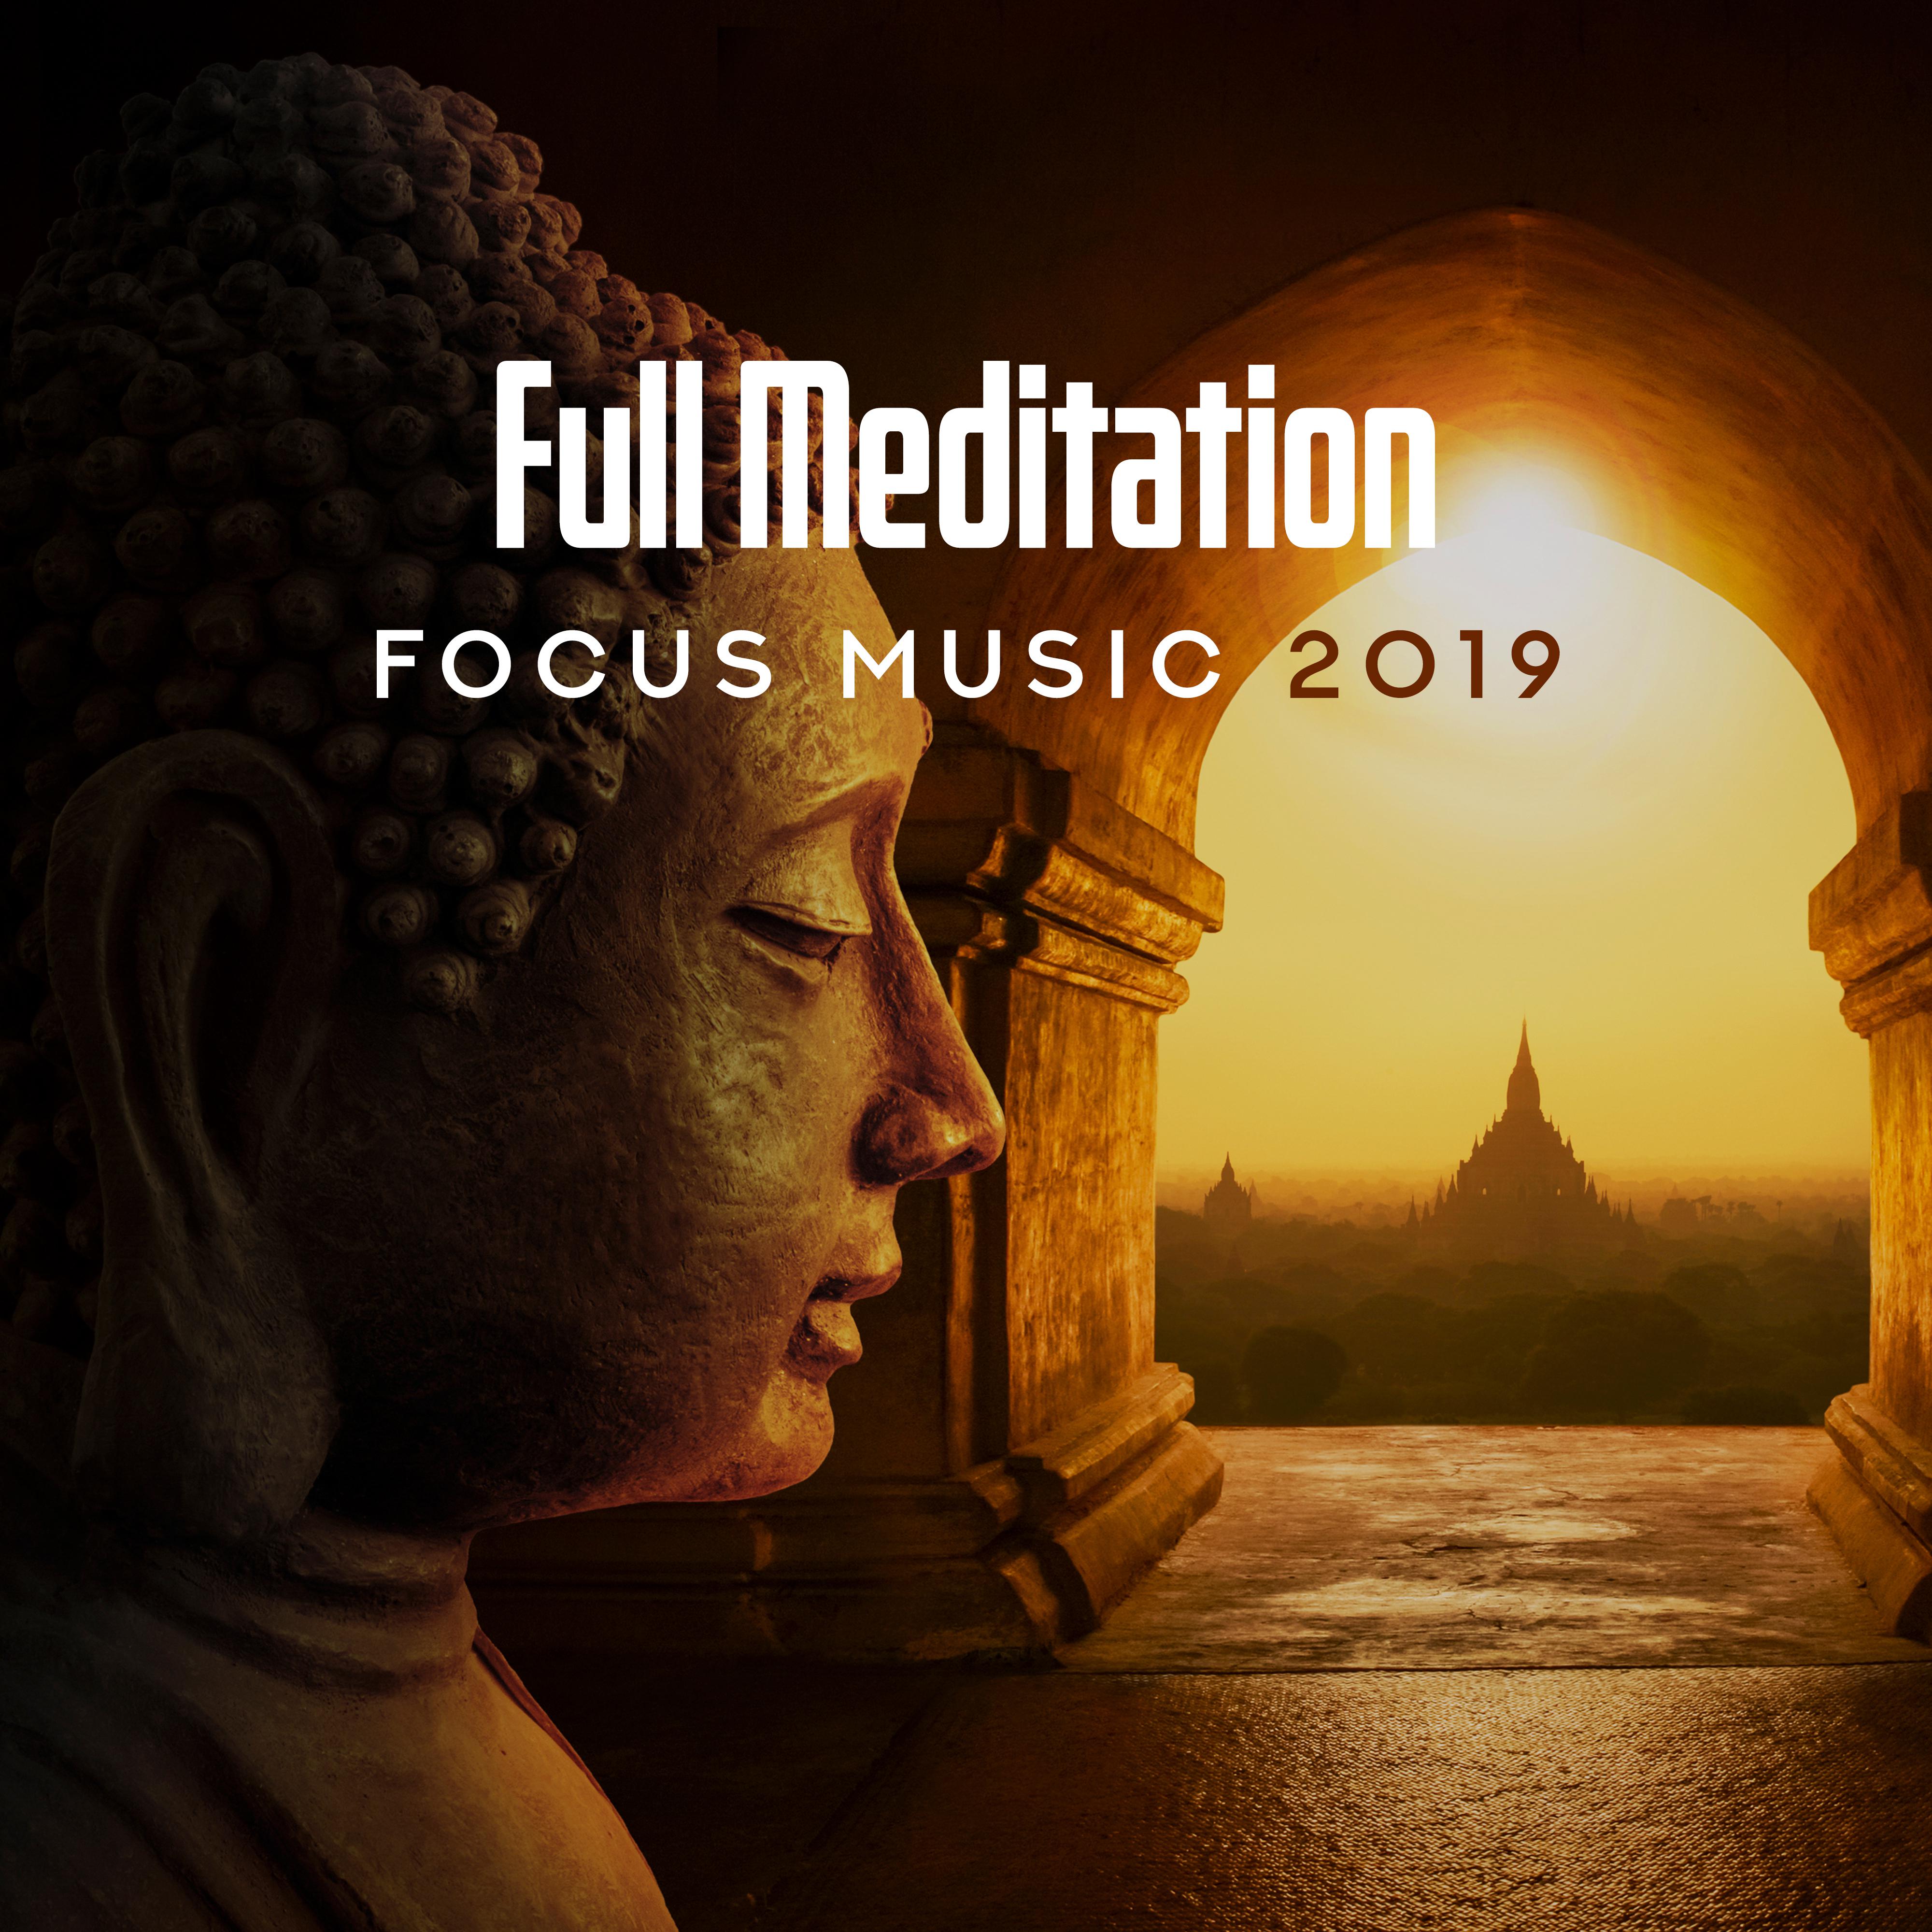 Full Meditation Focus Music 2019